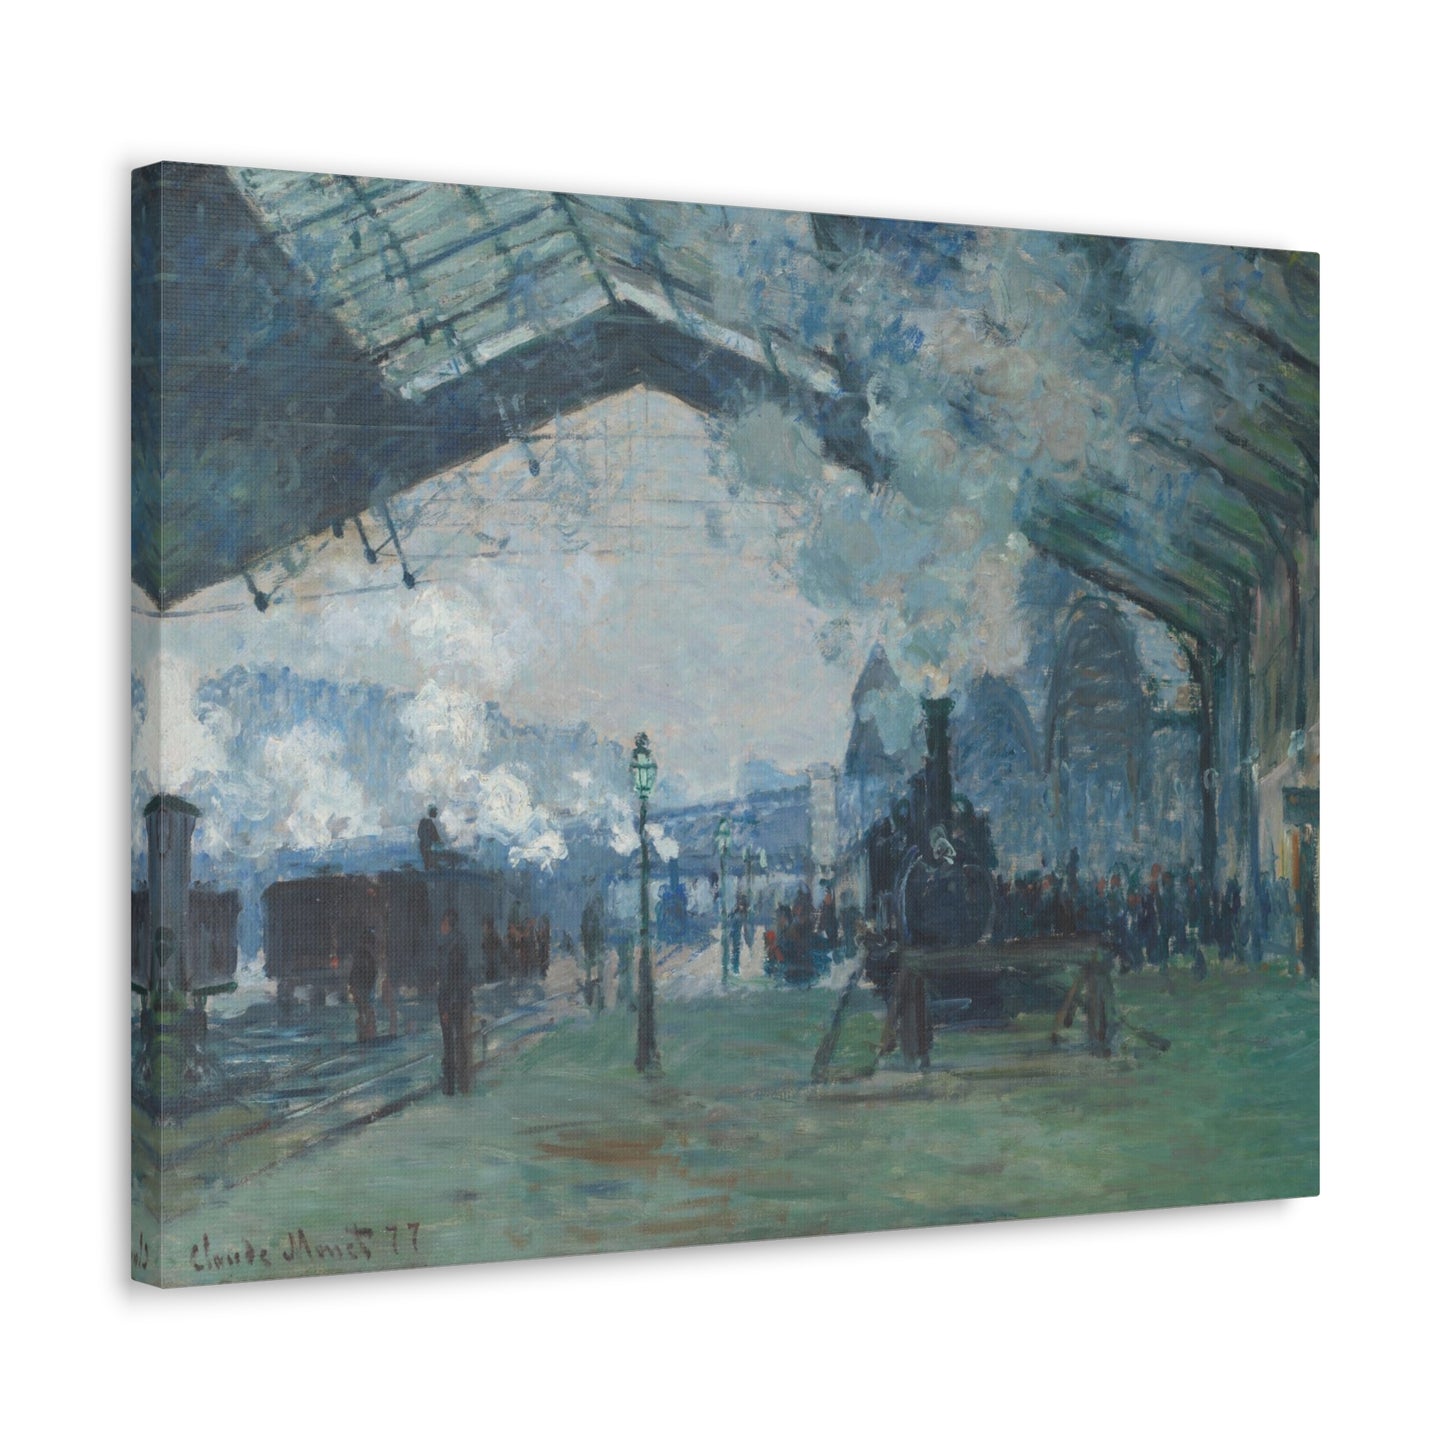 Arrival of the Normandy Train, Gare Saint-Lazare by Claude Monet - Canvas Print